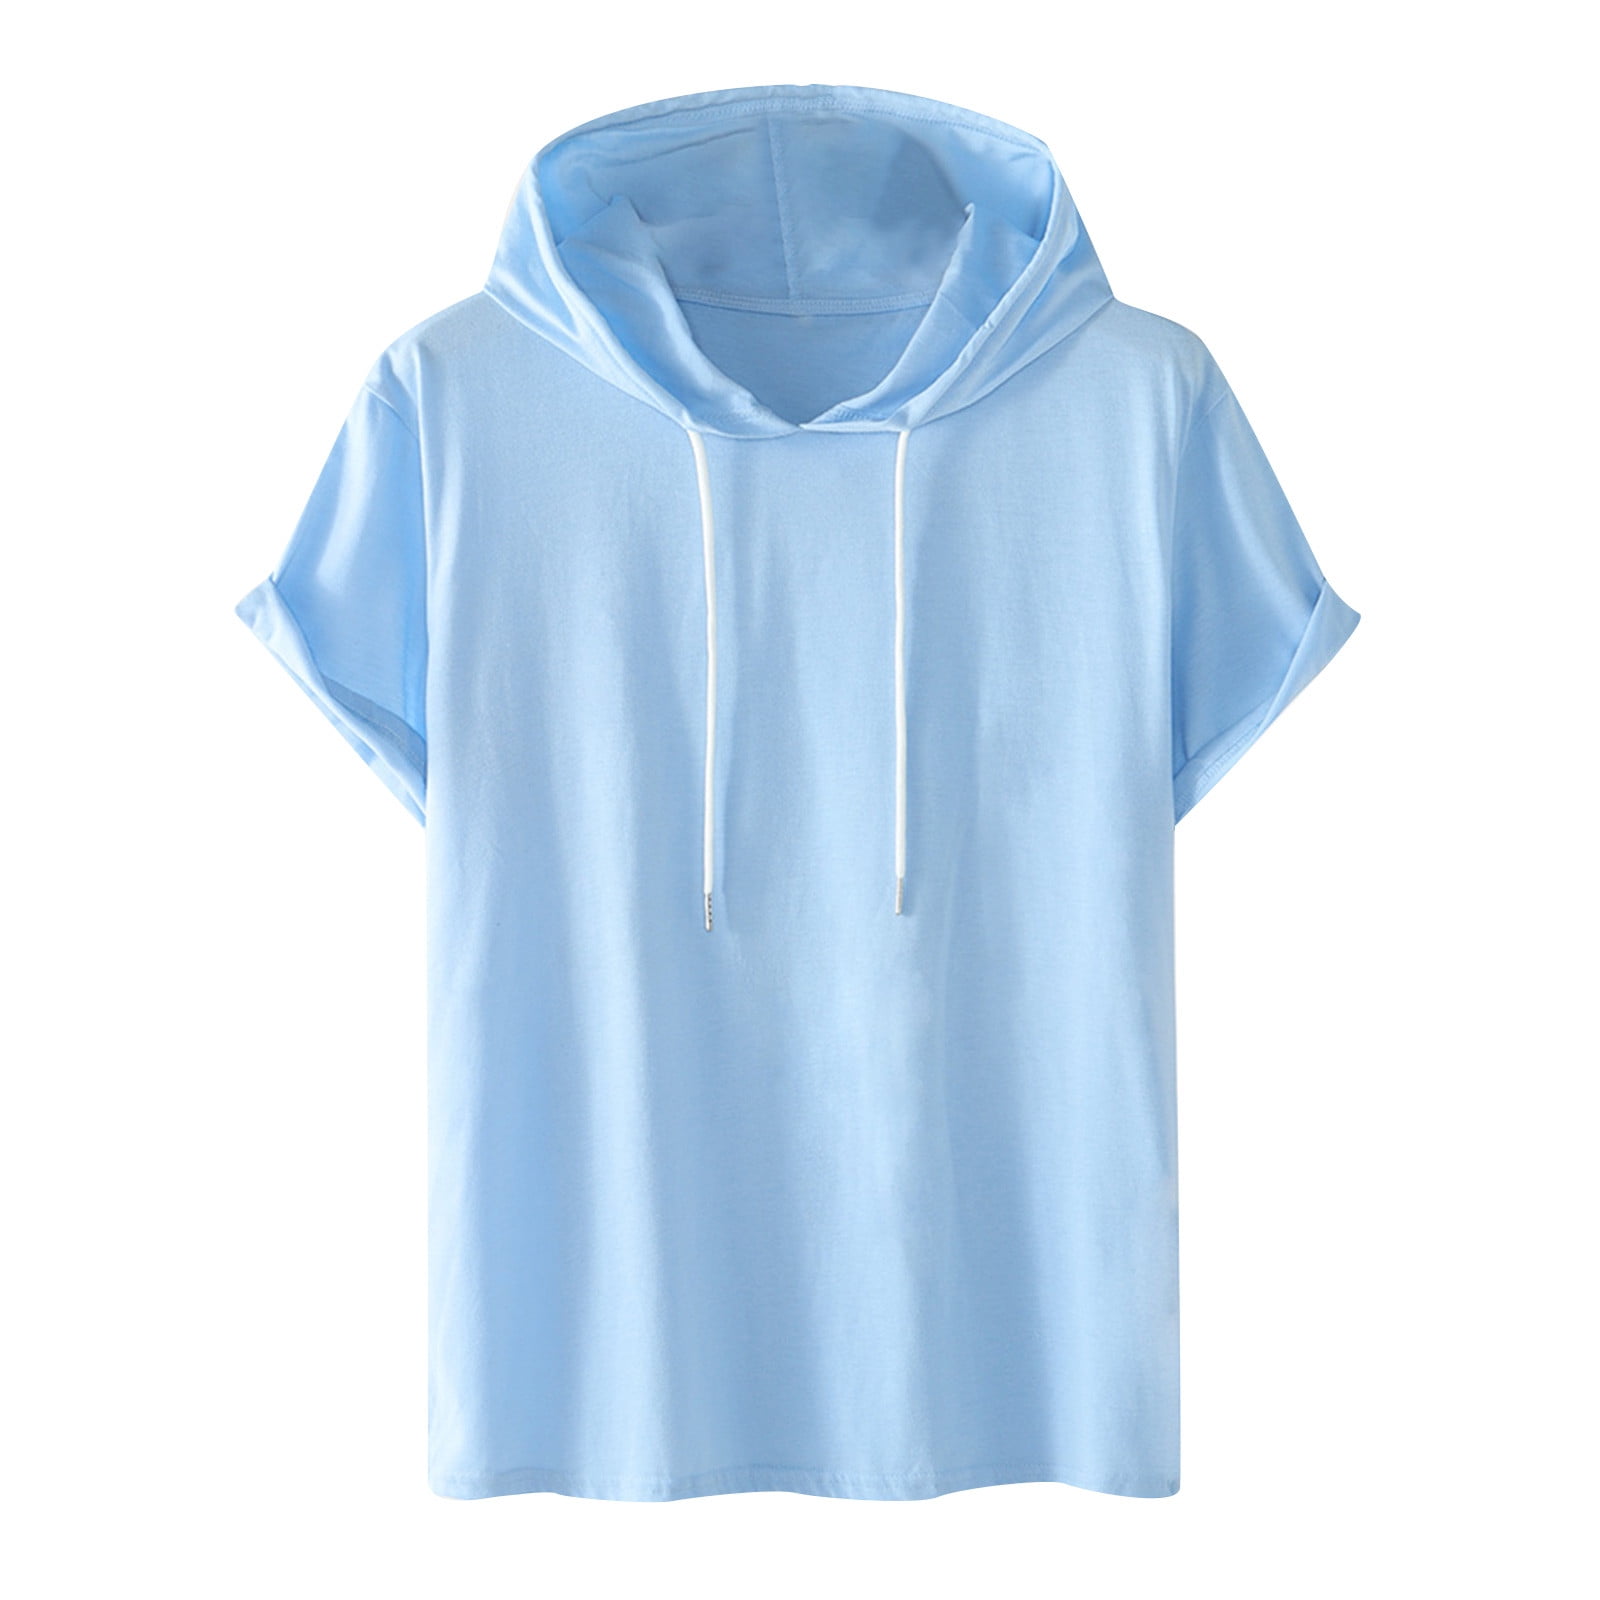 Men's Hooded Sweatshirt Casual Short Sleeve Solid Color Summer Tops ...